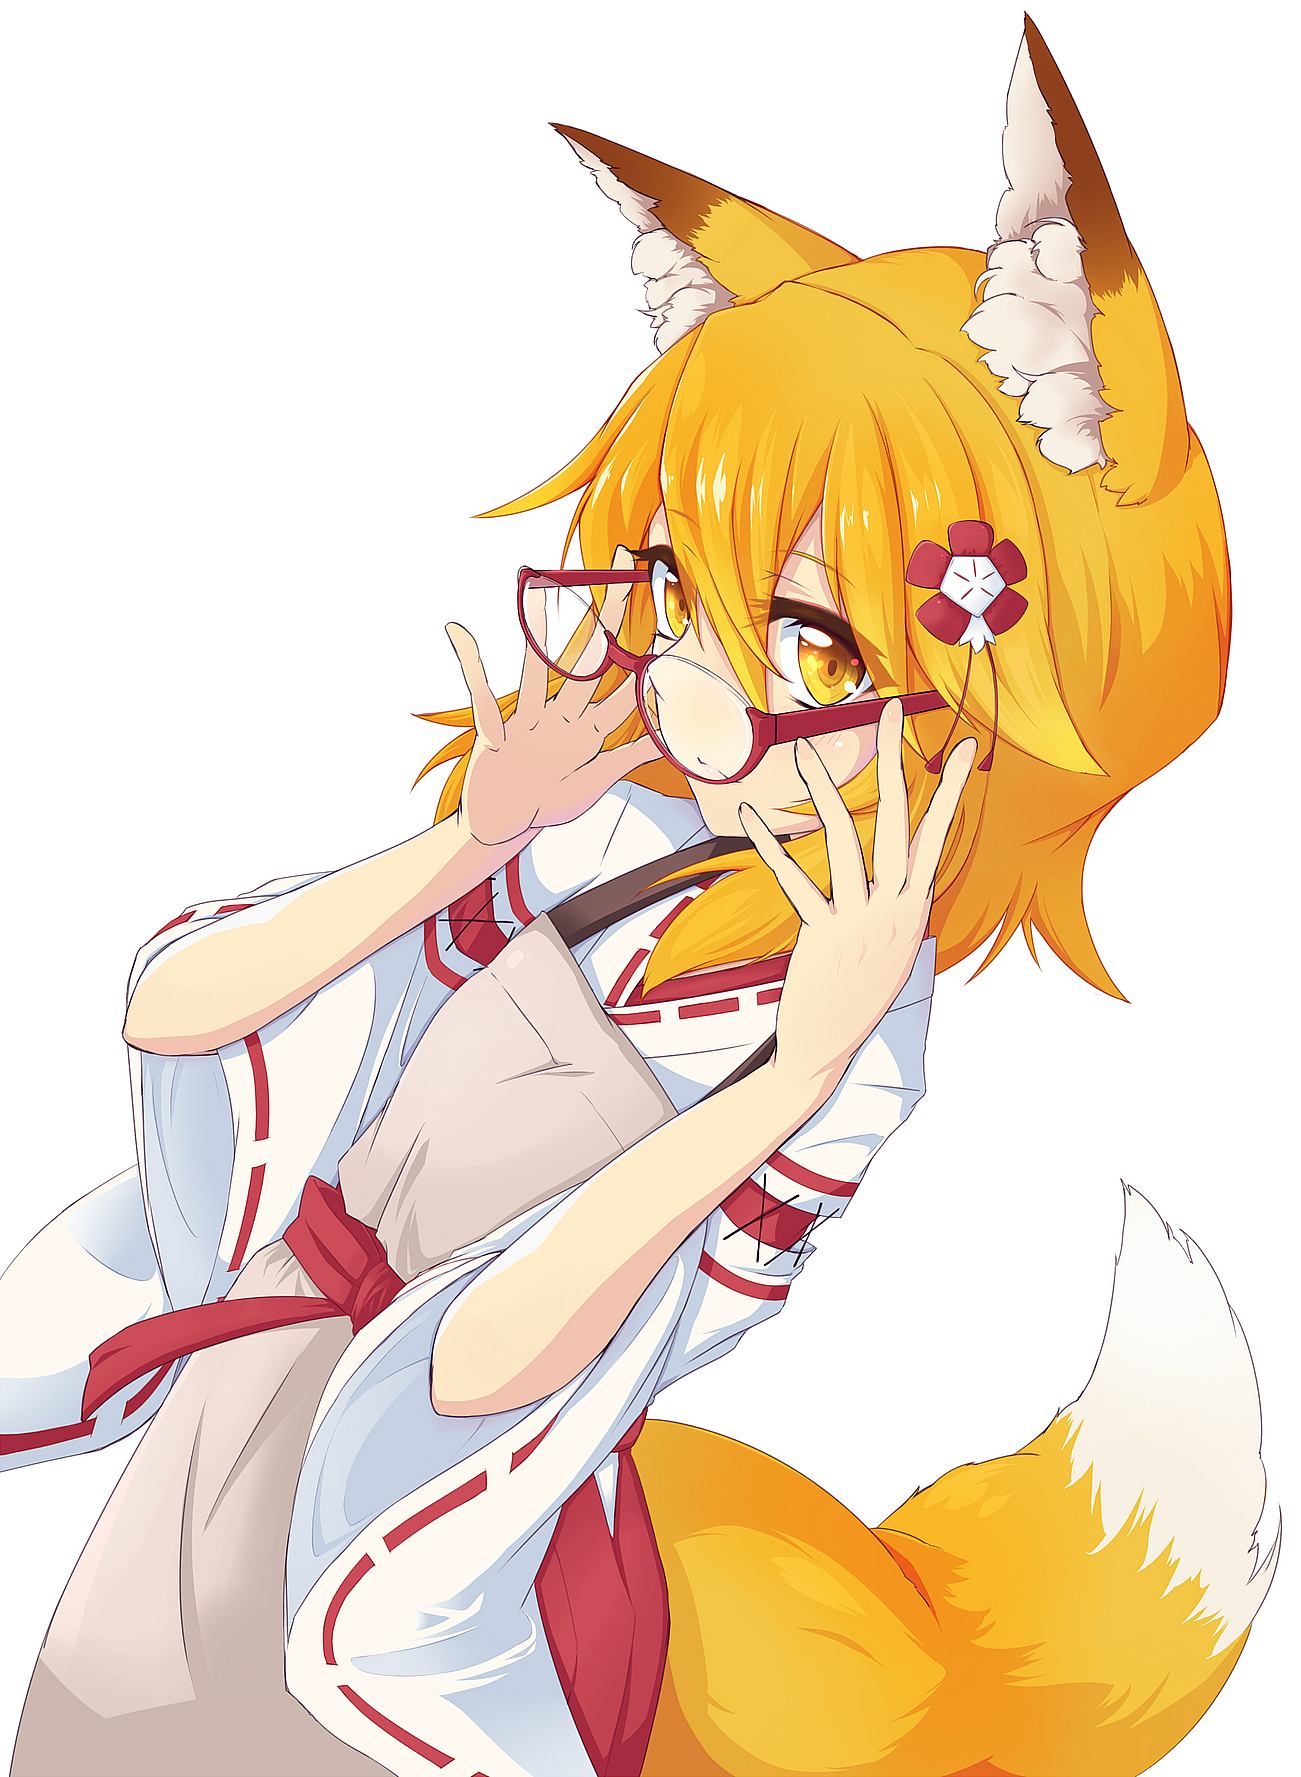 Cute fox-girl: Sewayaki Kitsune no Senko-san anime art: Sewayaki Kitsune no Senko-san (Artist: Suu2510)